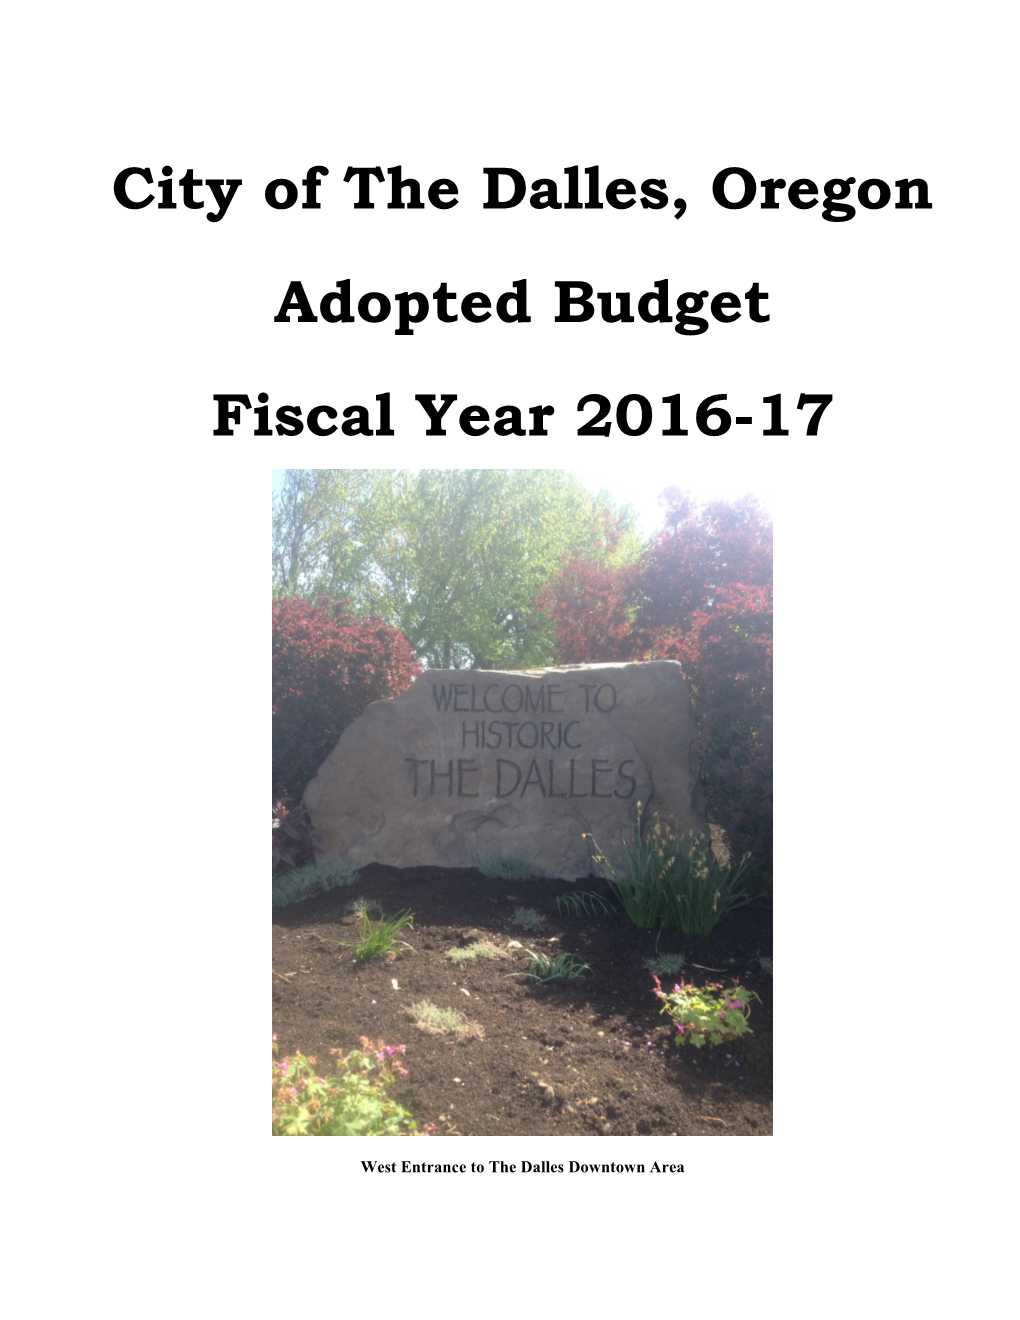 City of the Dalles, Oregon